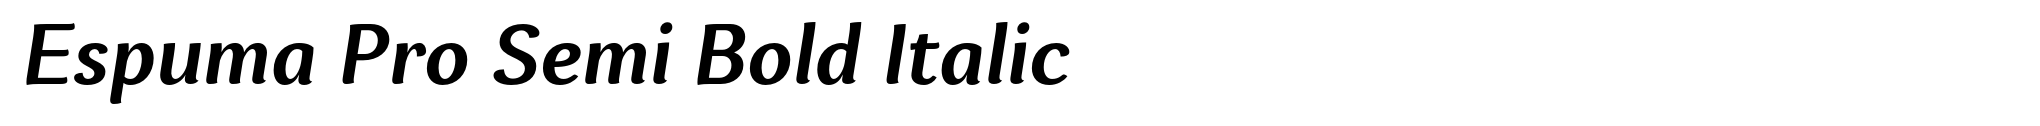 Espuma Pro Semi Bold Italic image